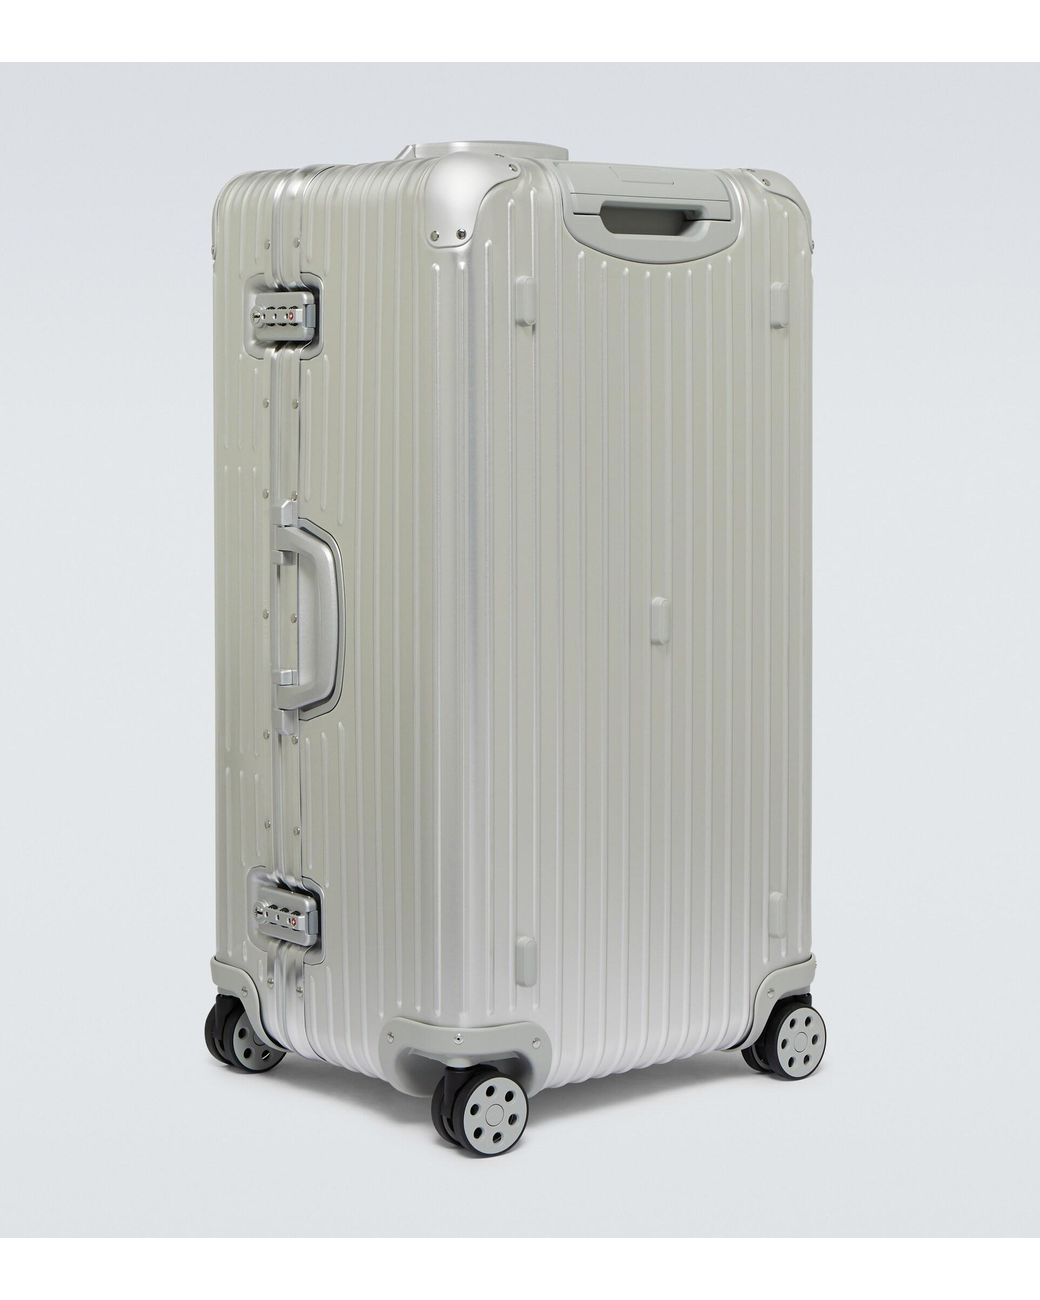 Rimowa Original Trunk Multiwheel Luggage Silver